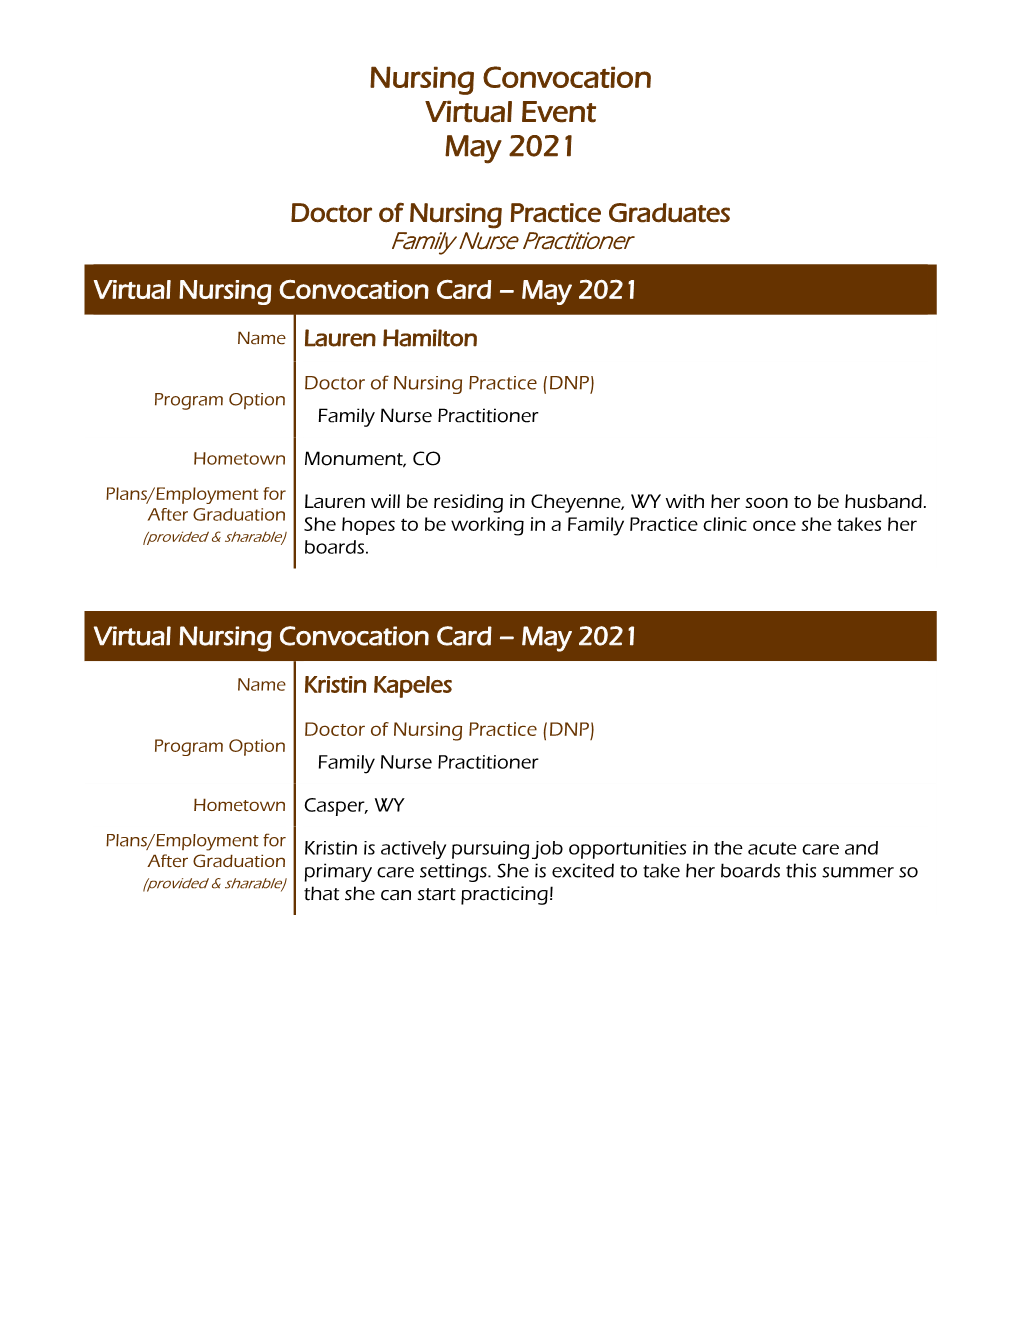 Nursing Convocation Virtual Event May 2021